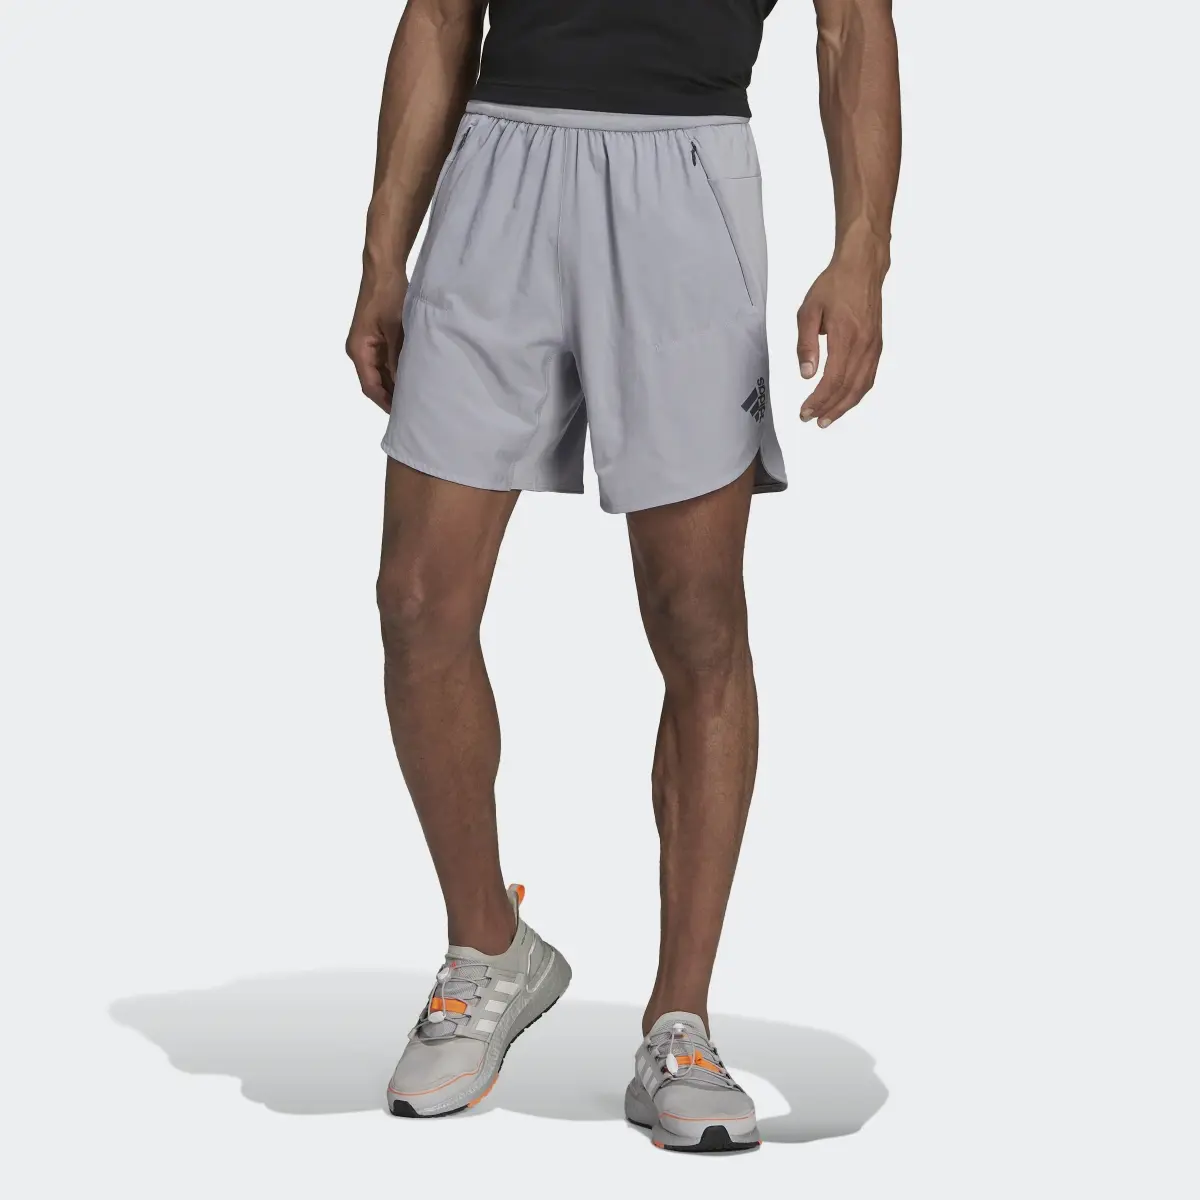 Adidas Short Designed for Training. 1